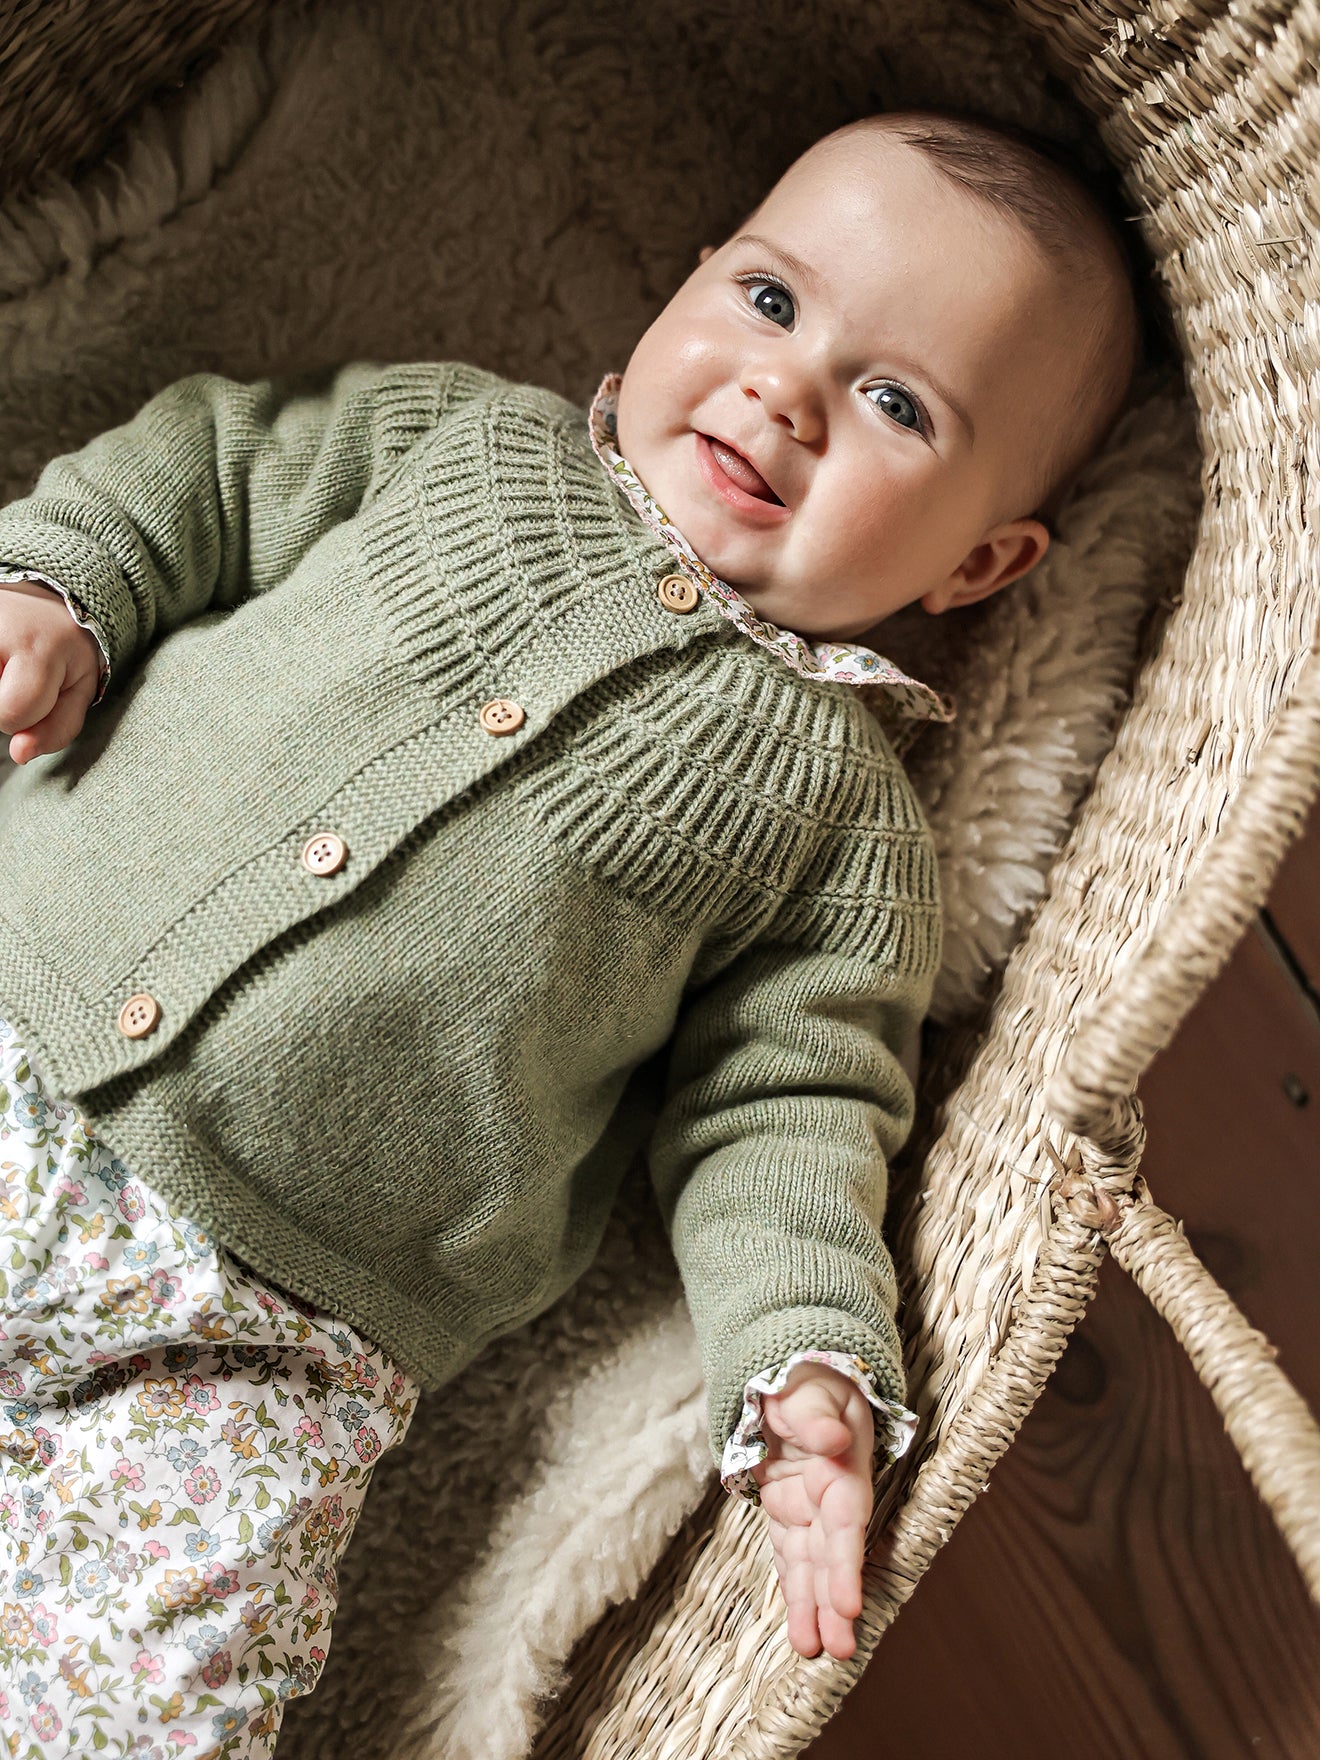 Pyjama en jersey Stitch - 18 mois